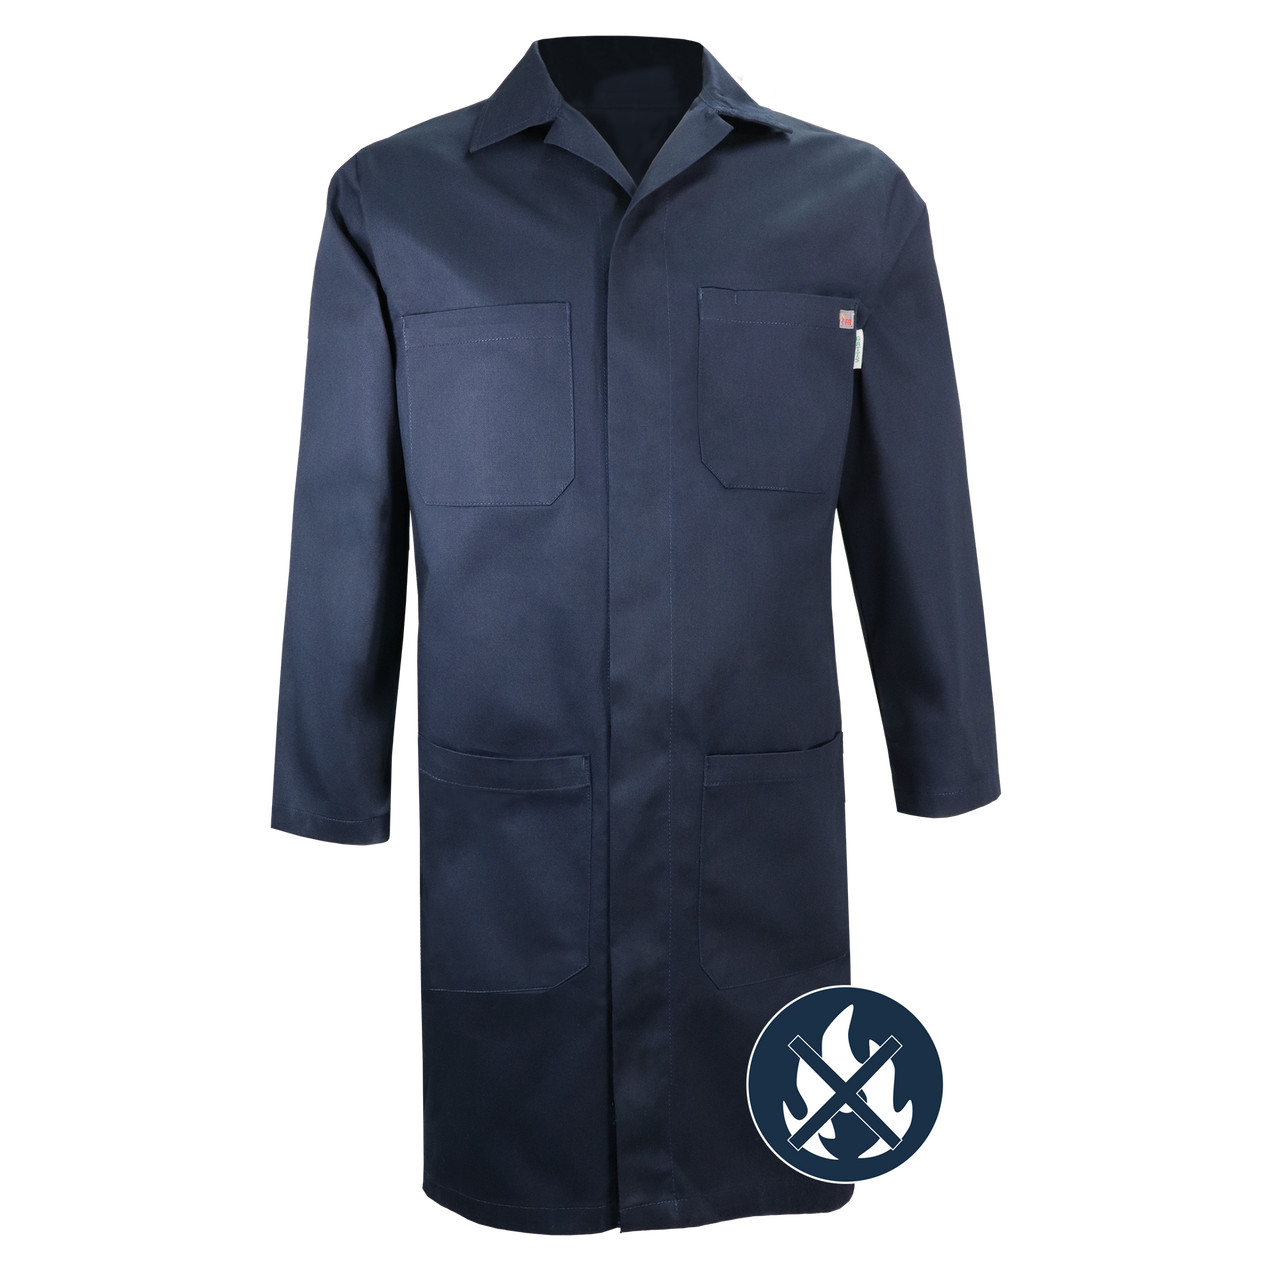 799FR - Sarrau Ignifuge||799FR - Fire Retardant Shop coat